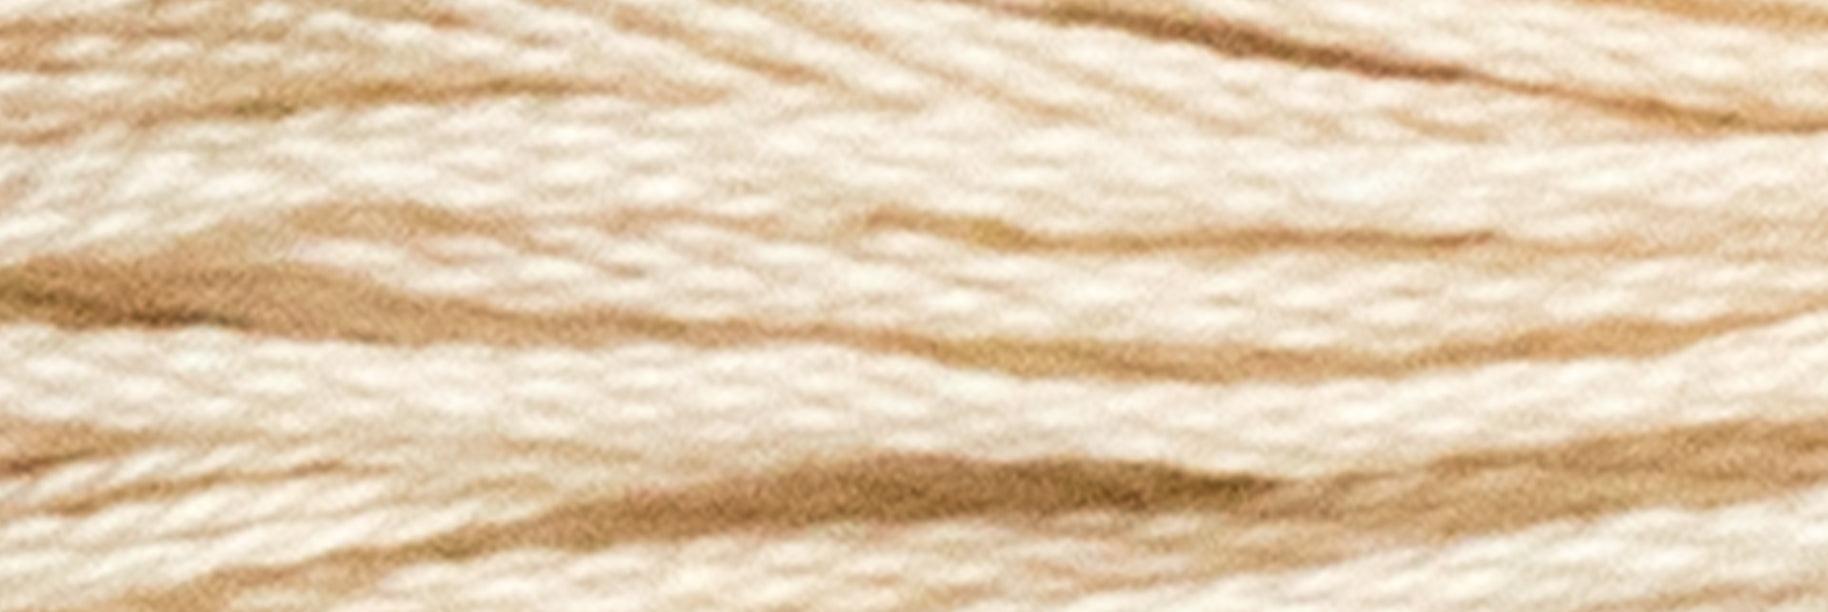 Stranded Cotton Luca-S - 458 / DMC x / Anchor 387 - Luca-S Stranded Cotton